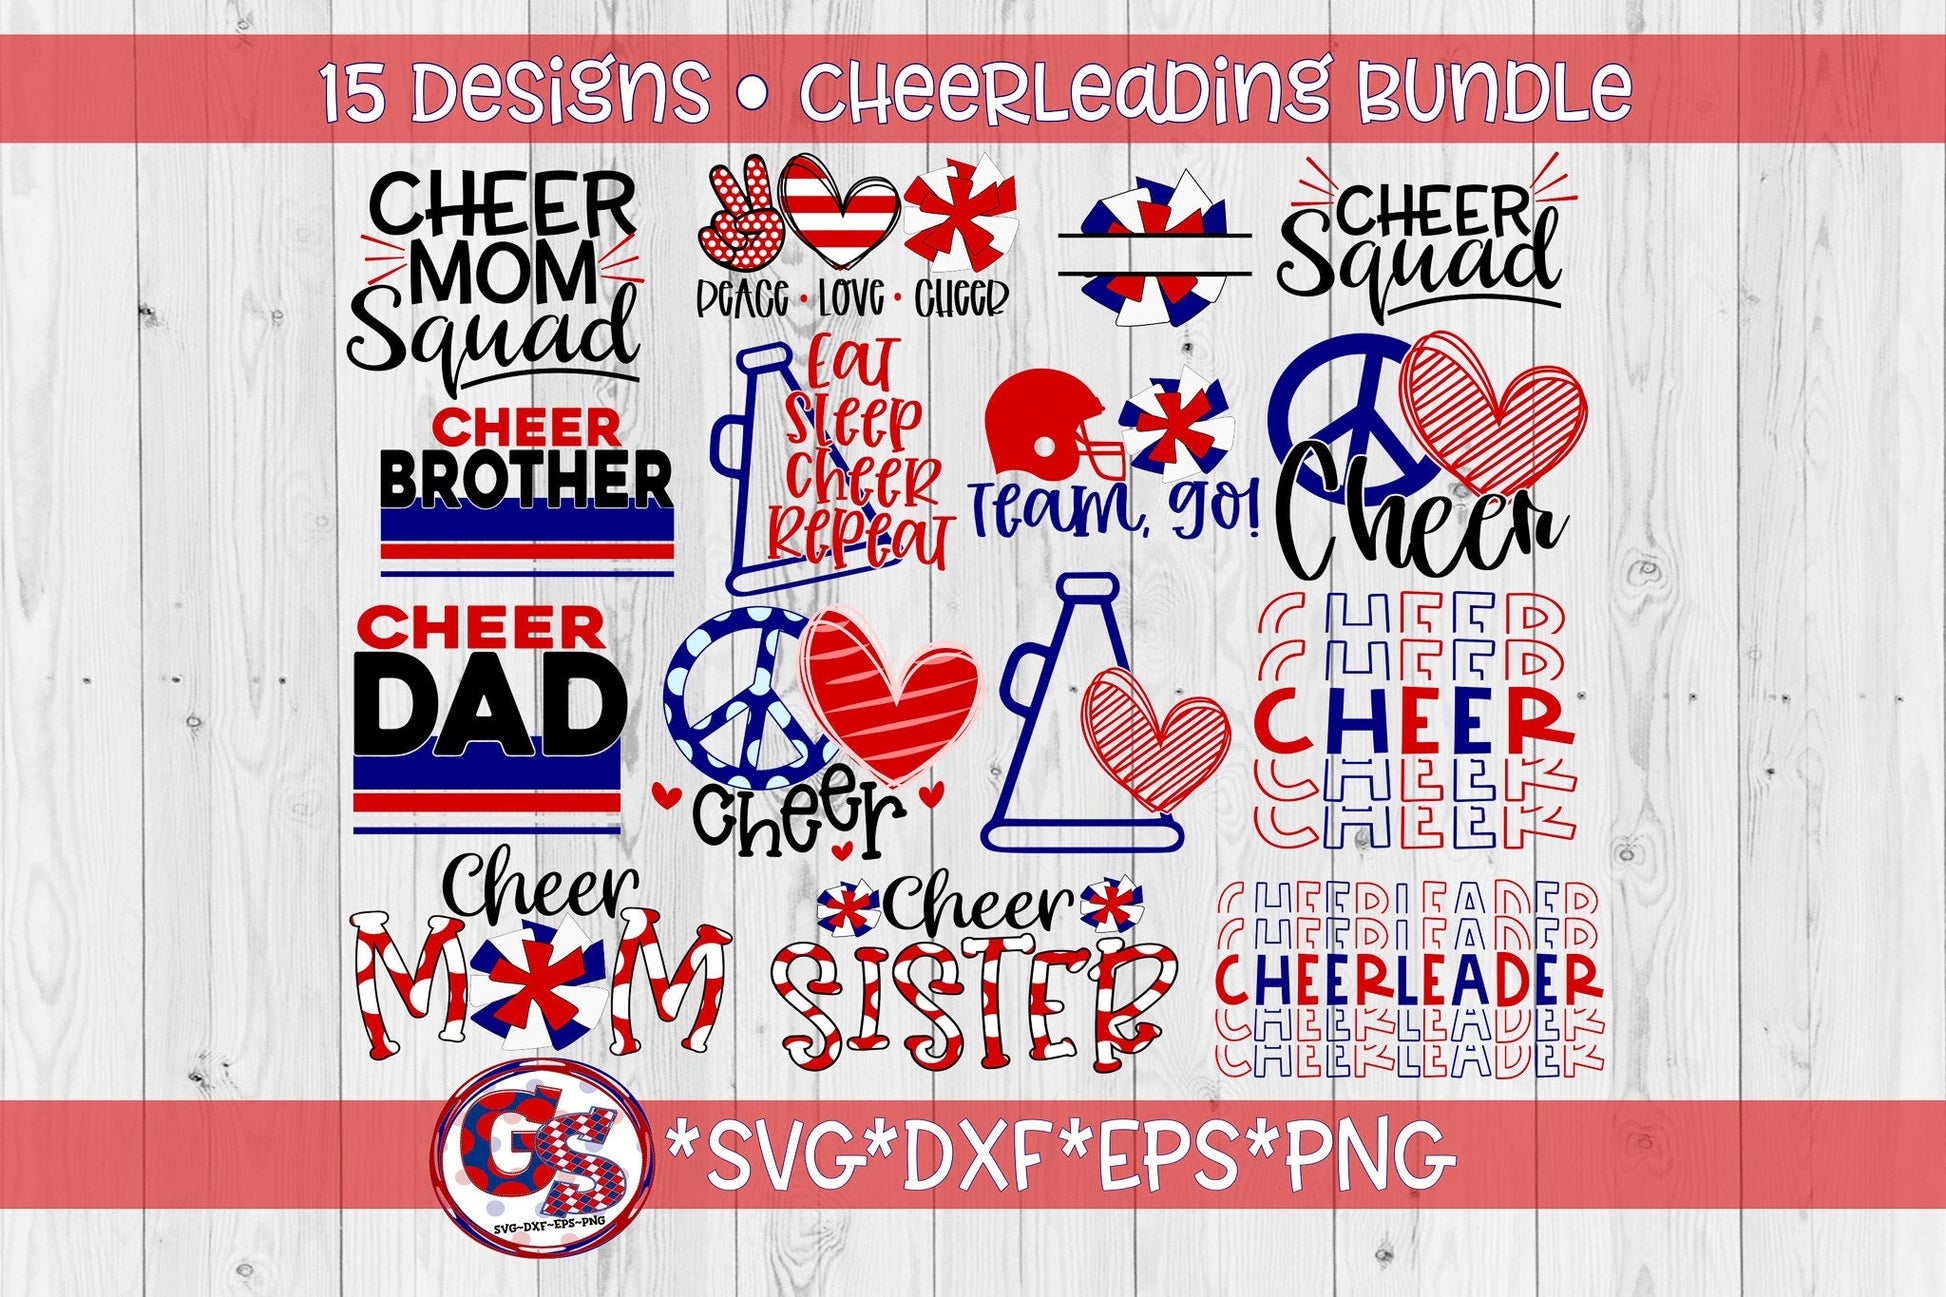 Cheerleader Bundle svg | Cheer svg | Megaphone | Cheer Mom svg, dxf, eps, png. Cheer Dad SvG | Cheer SvG | Instant Download Cut Files